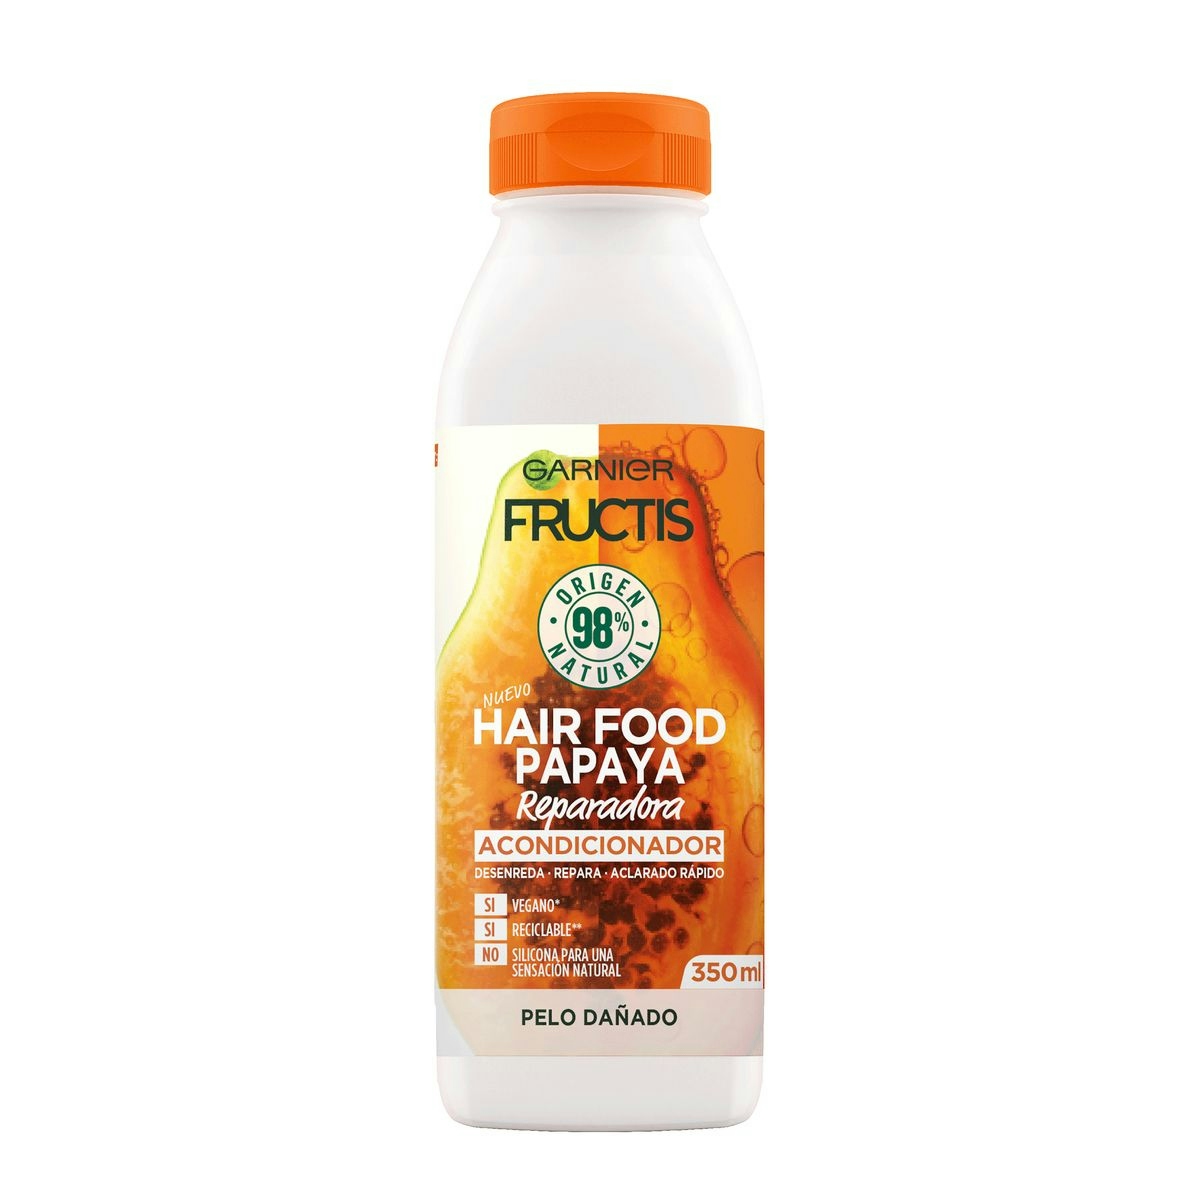 Acondicionador reparador papaya FRUCTIS Hair Food 350 ml